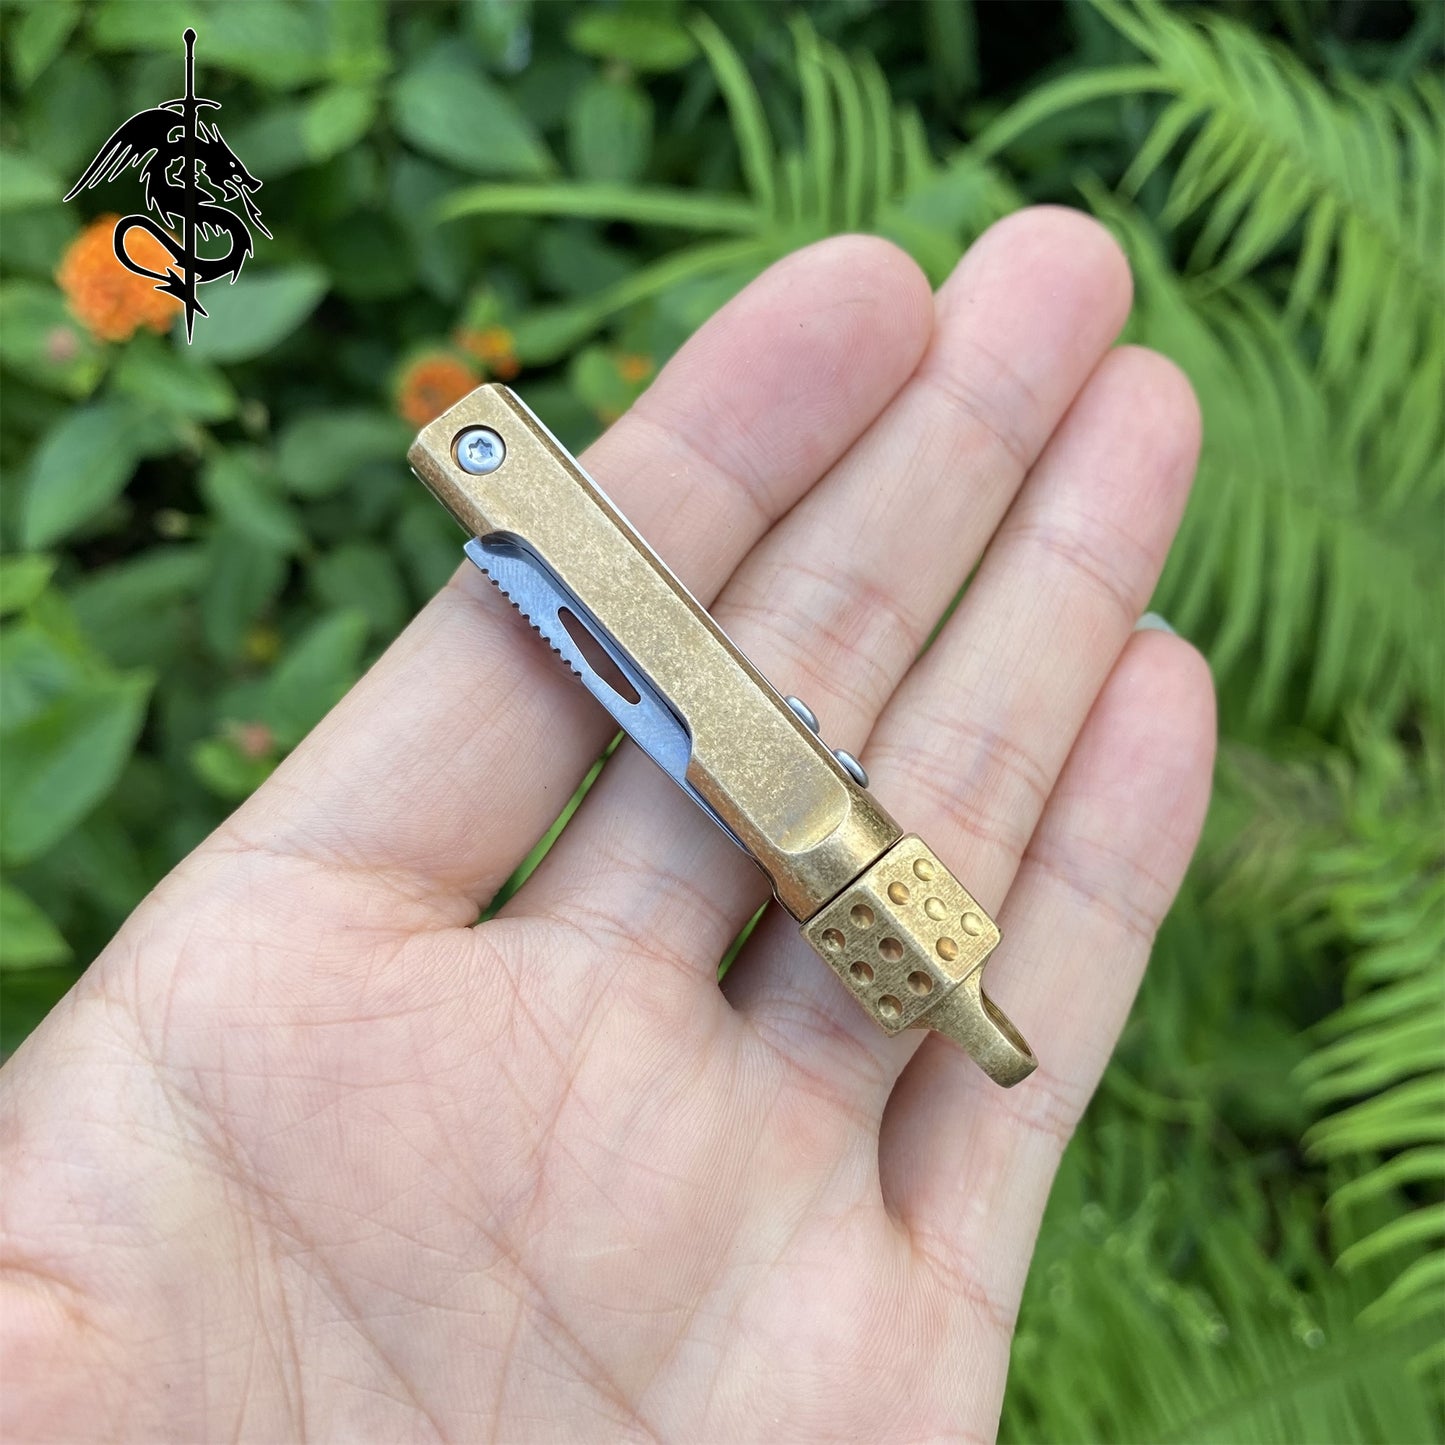 Brass Handle Creative Portable Pocket Folding Knife